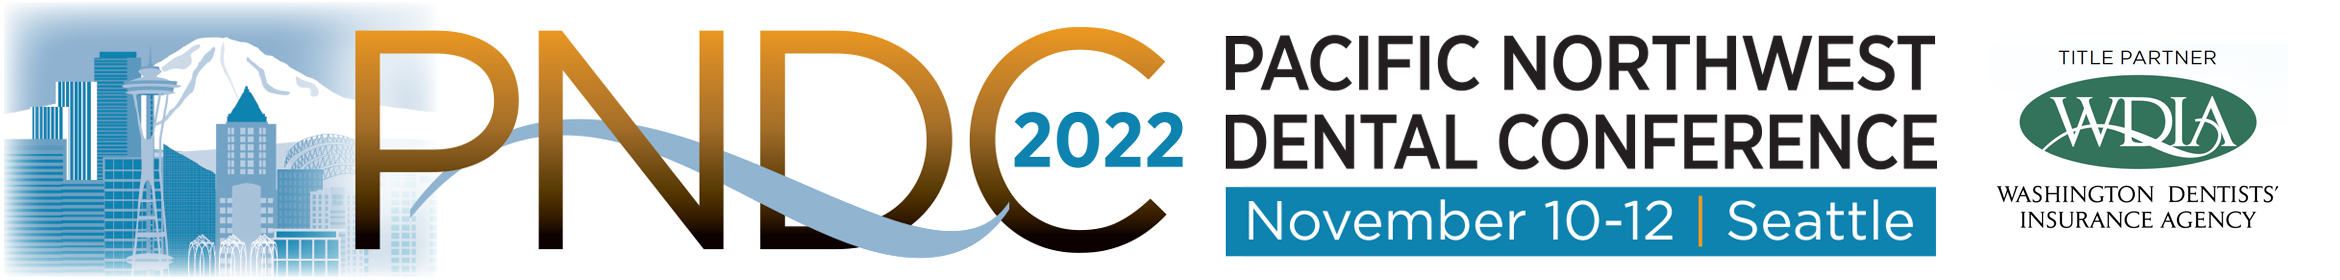 PNDC 2022 Main banner